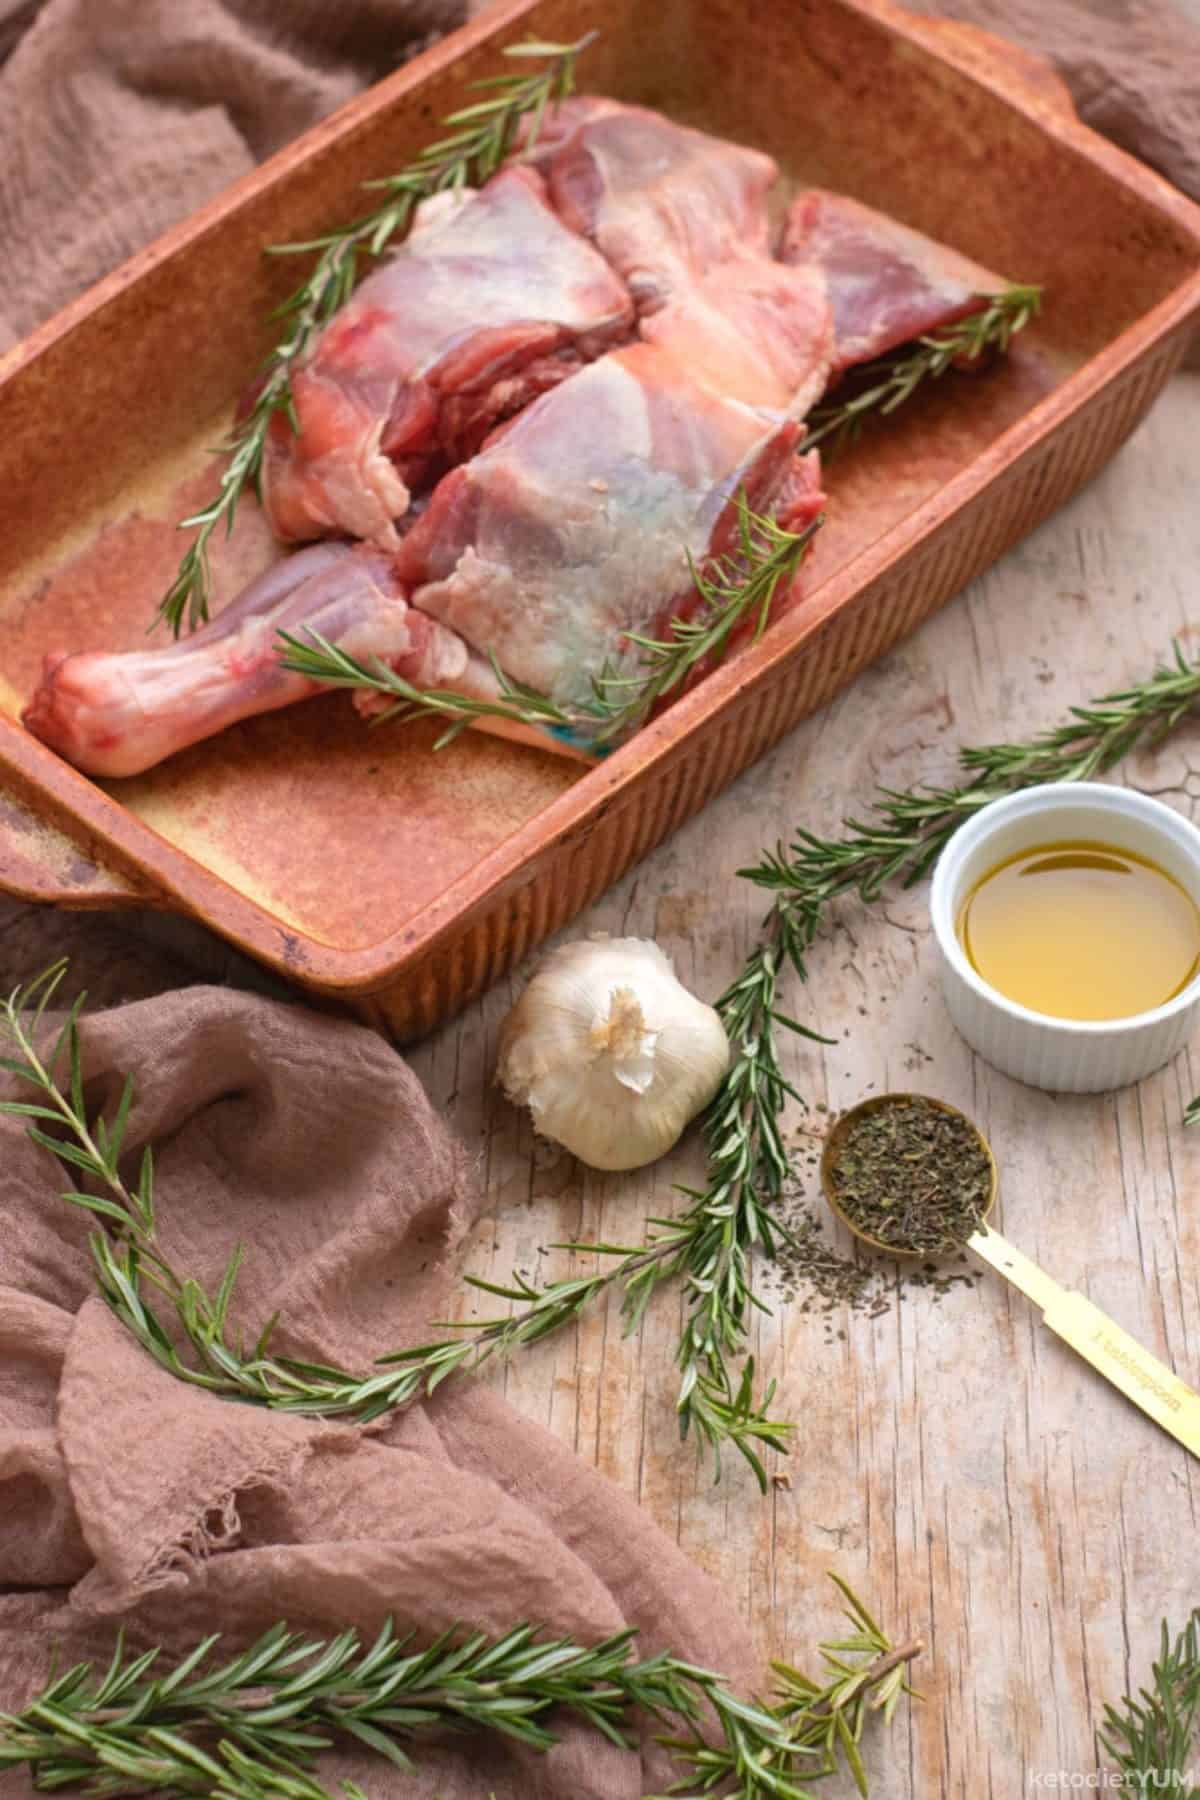 Raw leg of lamb with garlic, rosemary, olive oil and seasonings ready to bake